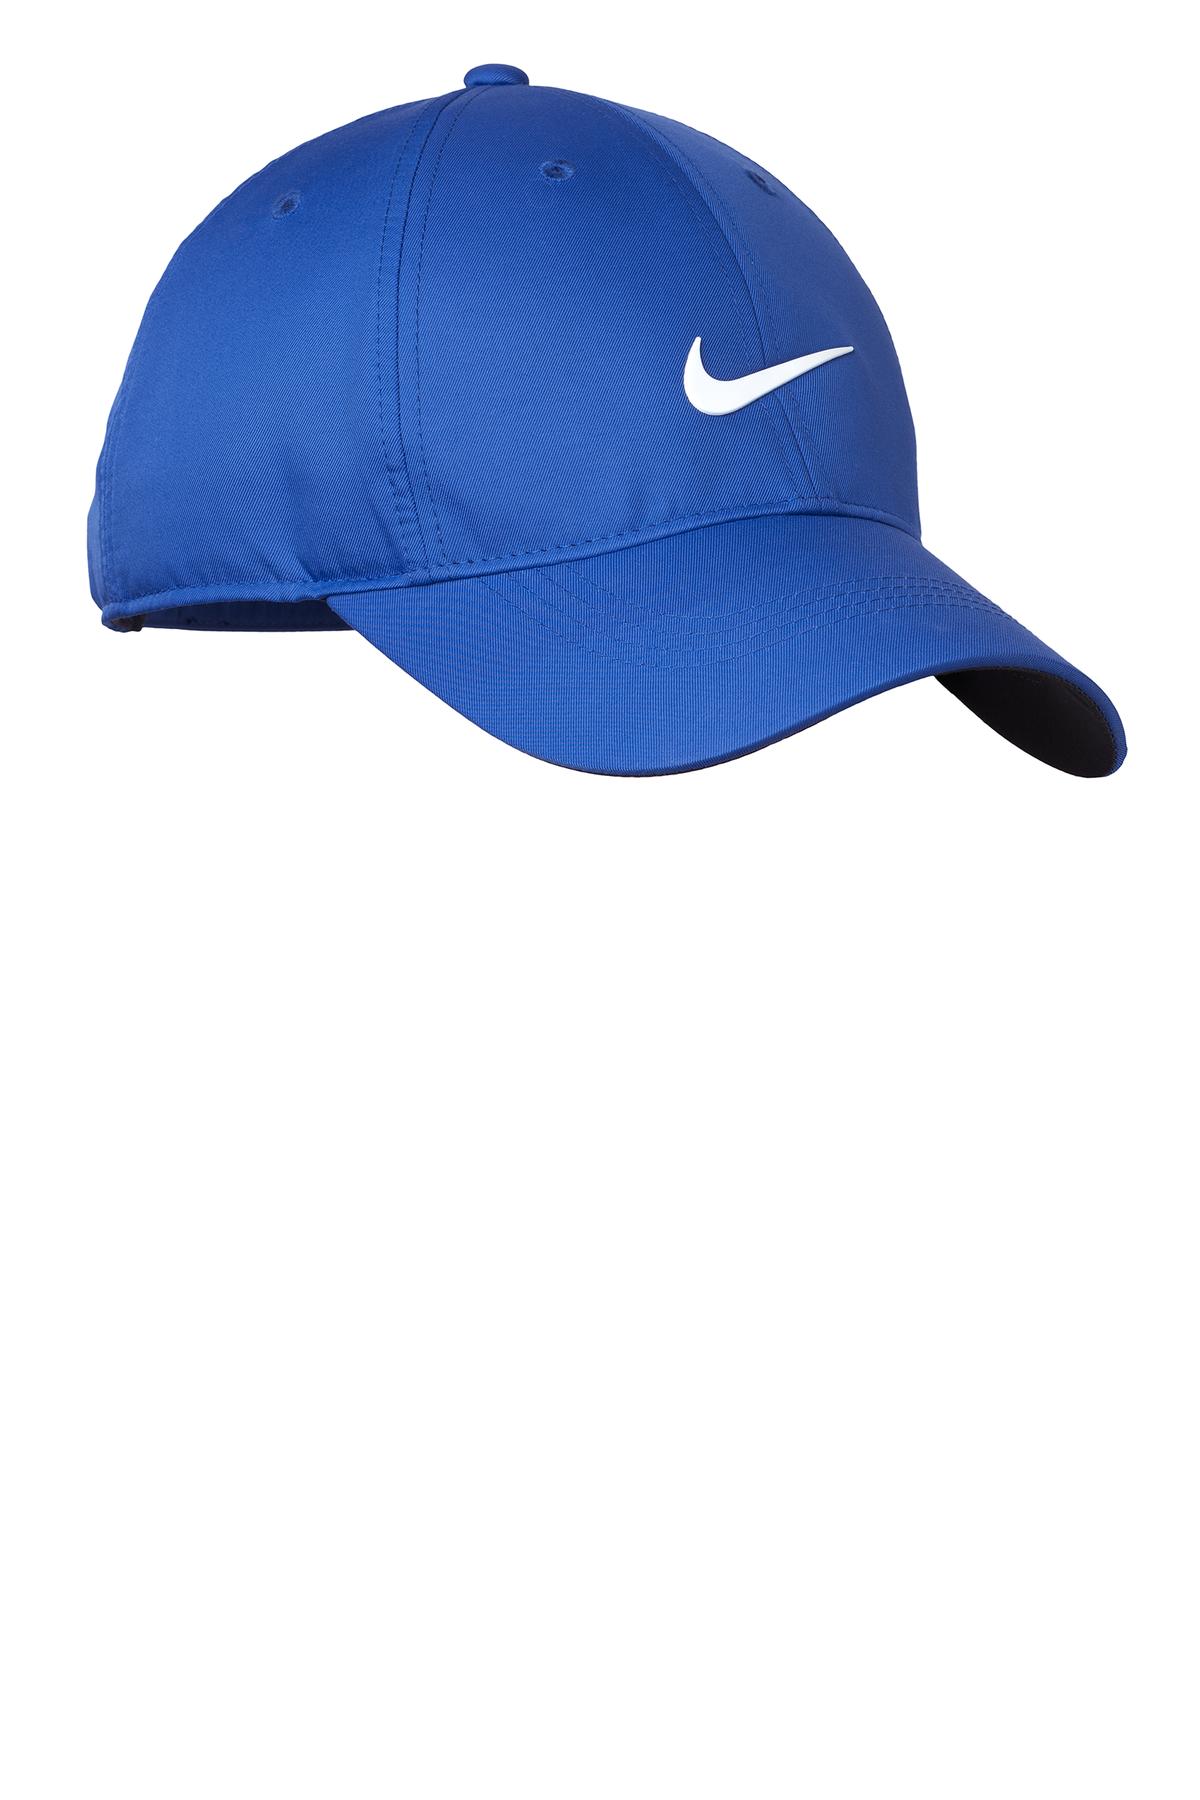 Nike Hospitality Caps Dri-FIT Swoosh Front Cap.-Nike